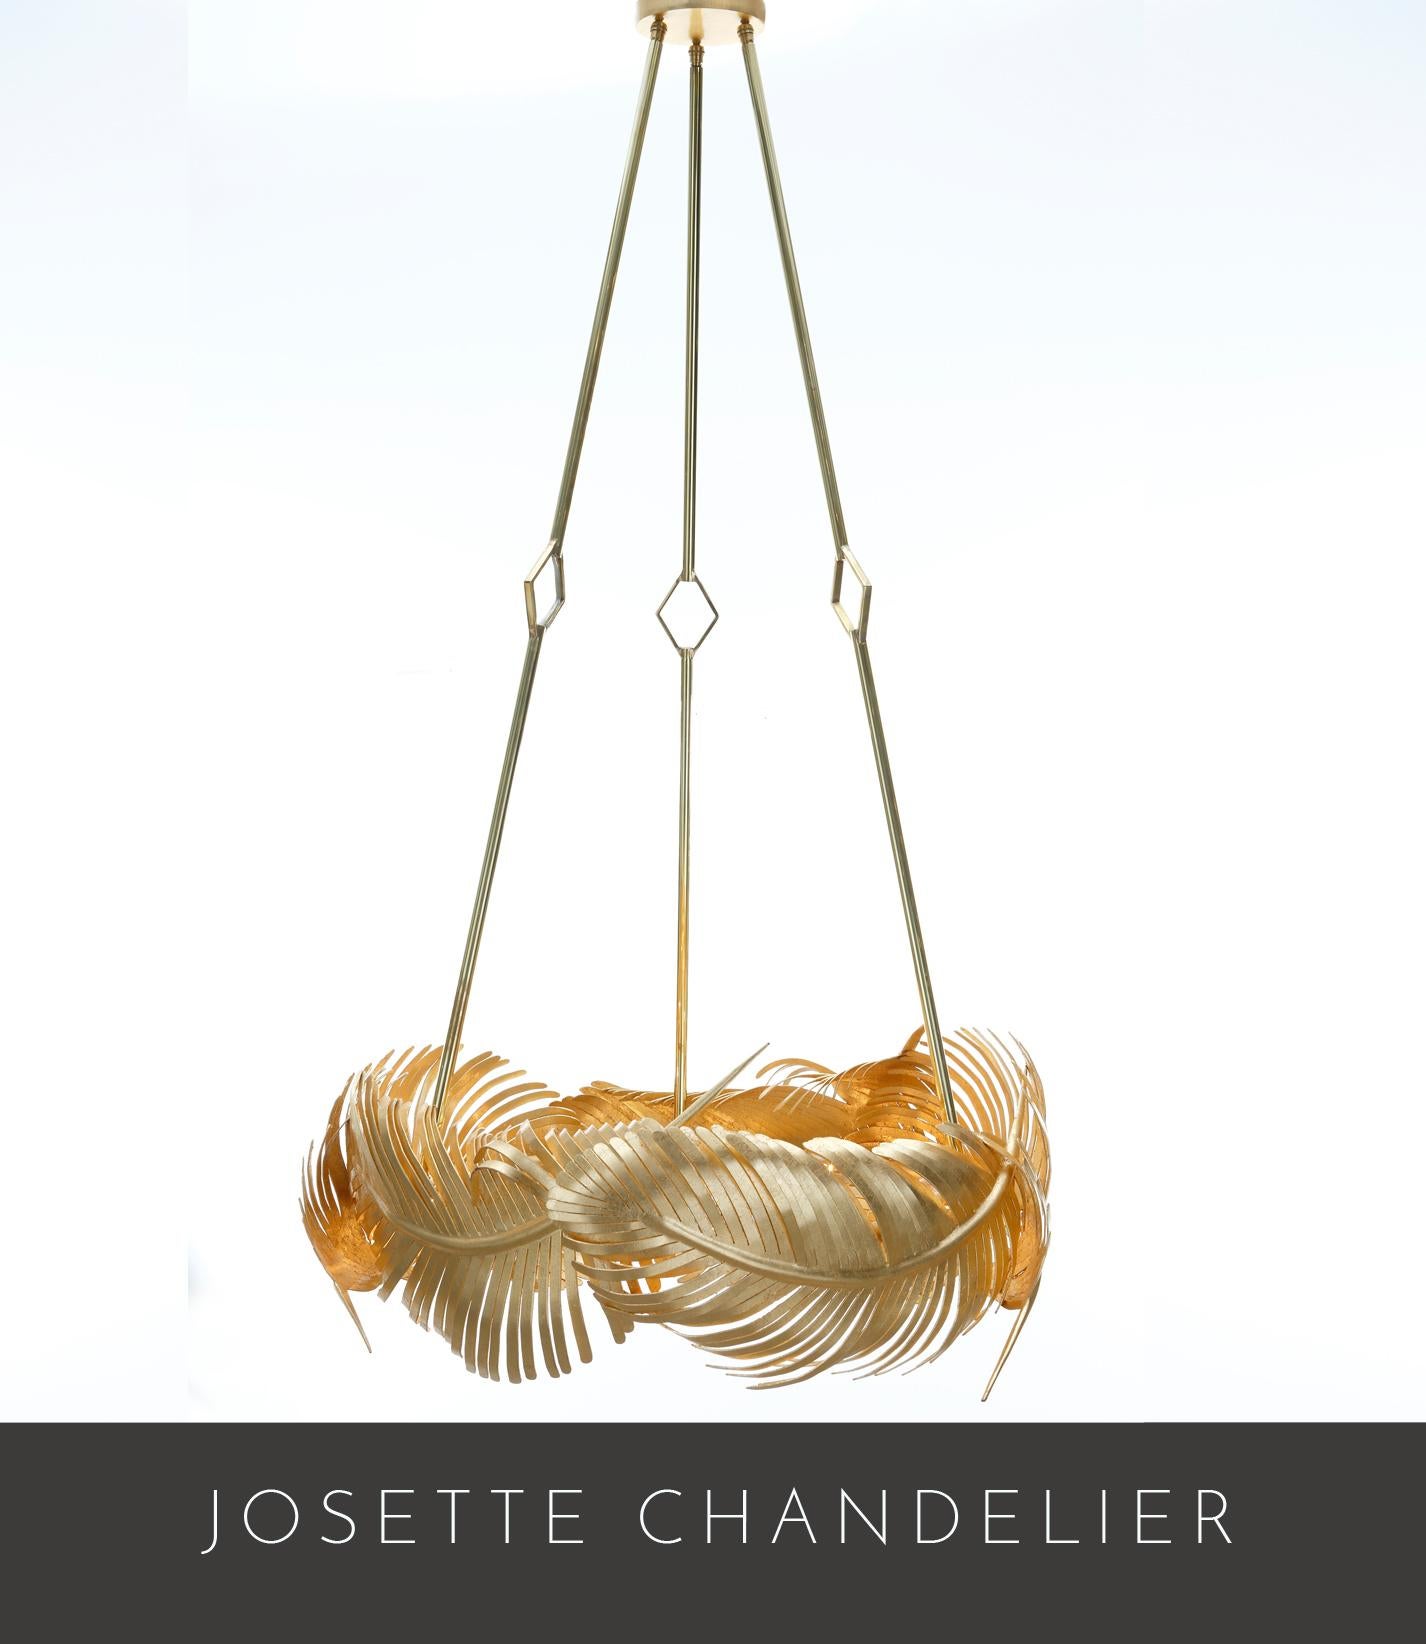 American Josette Chandelier Showroom Sample